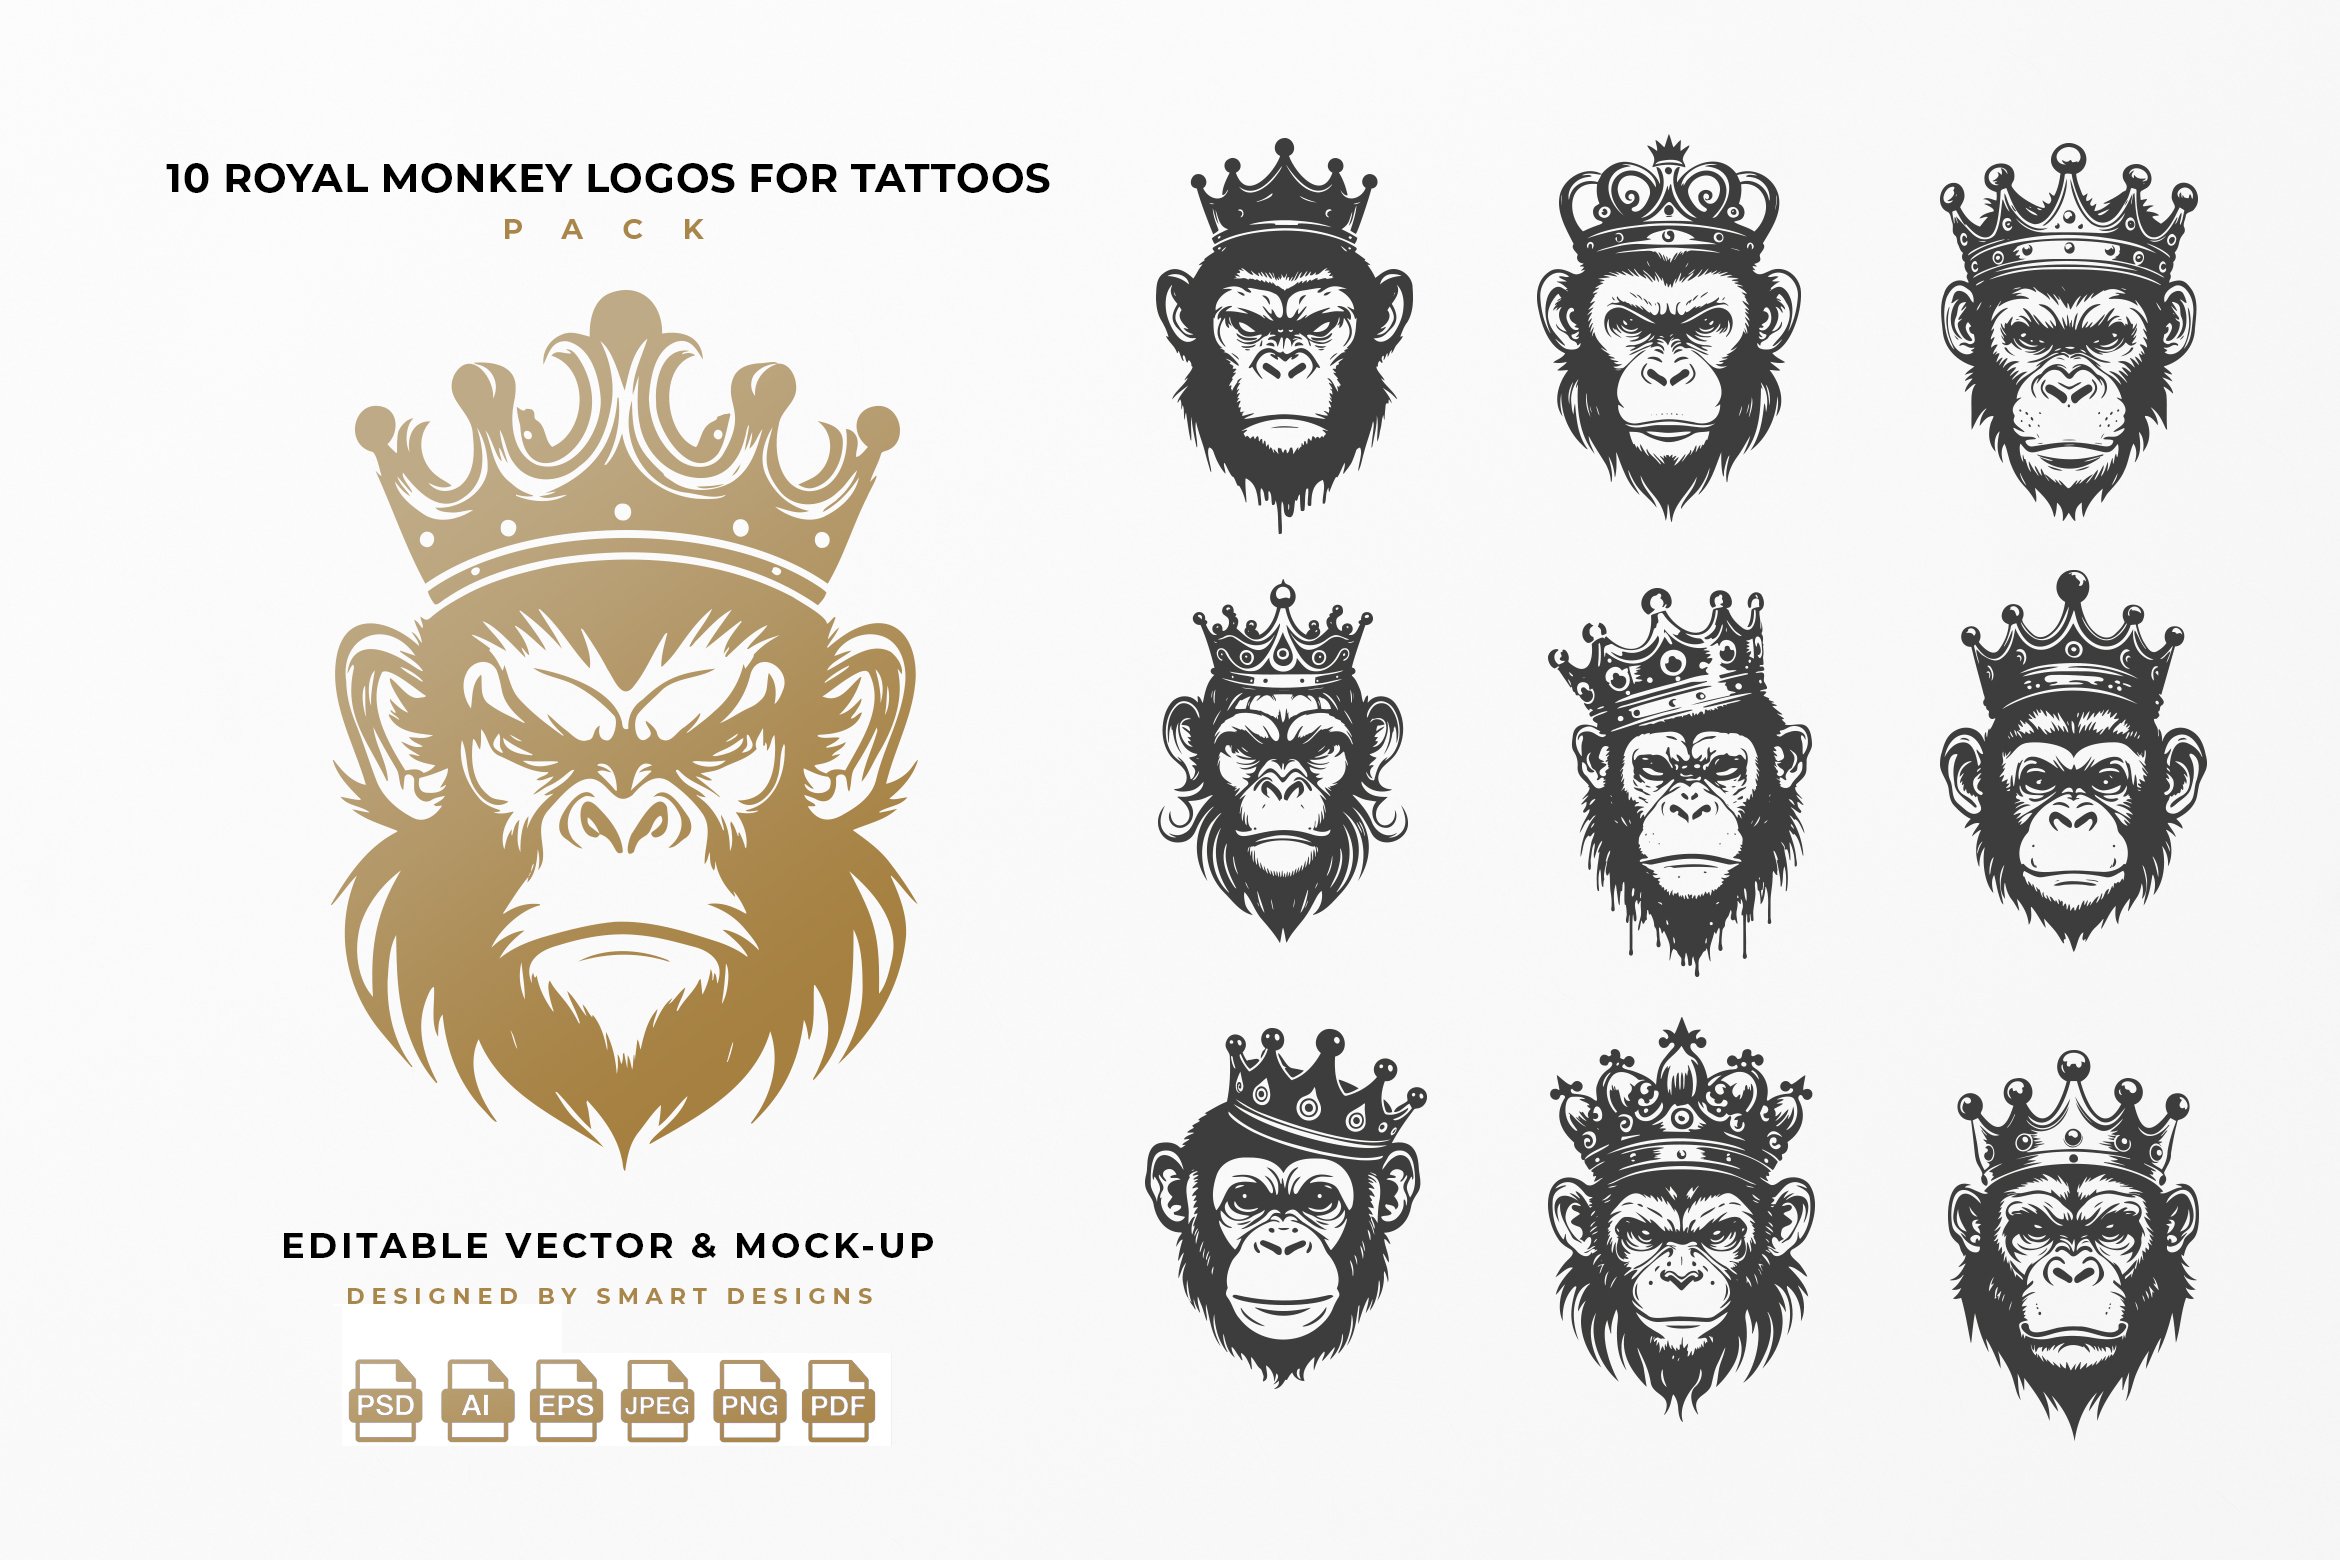 royal monkey logos for tattoos pack x10 693